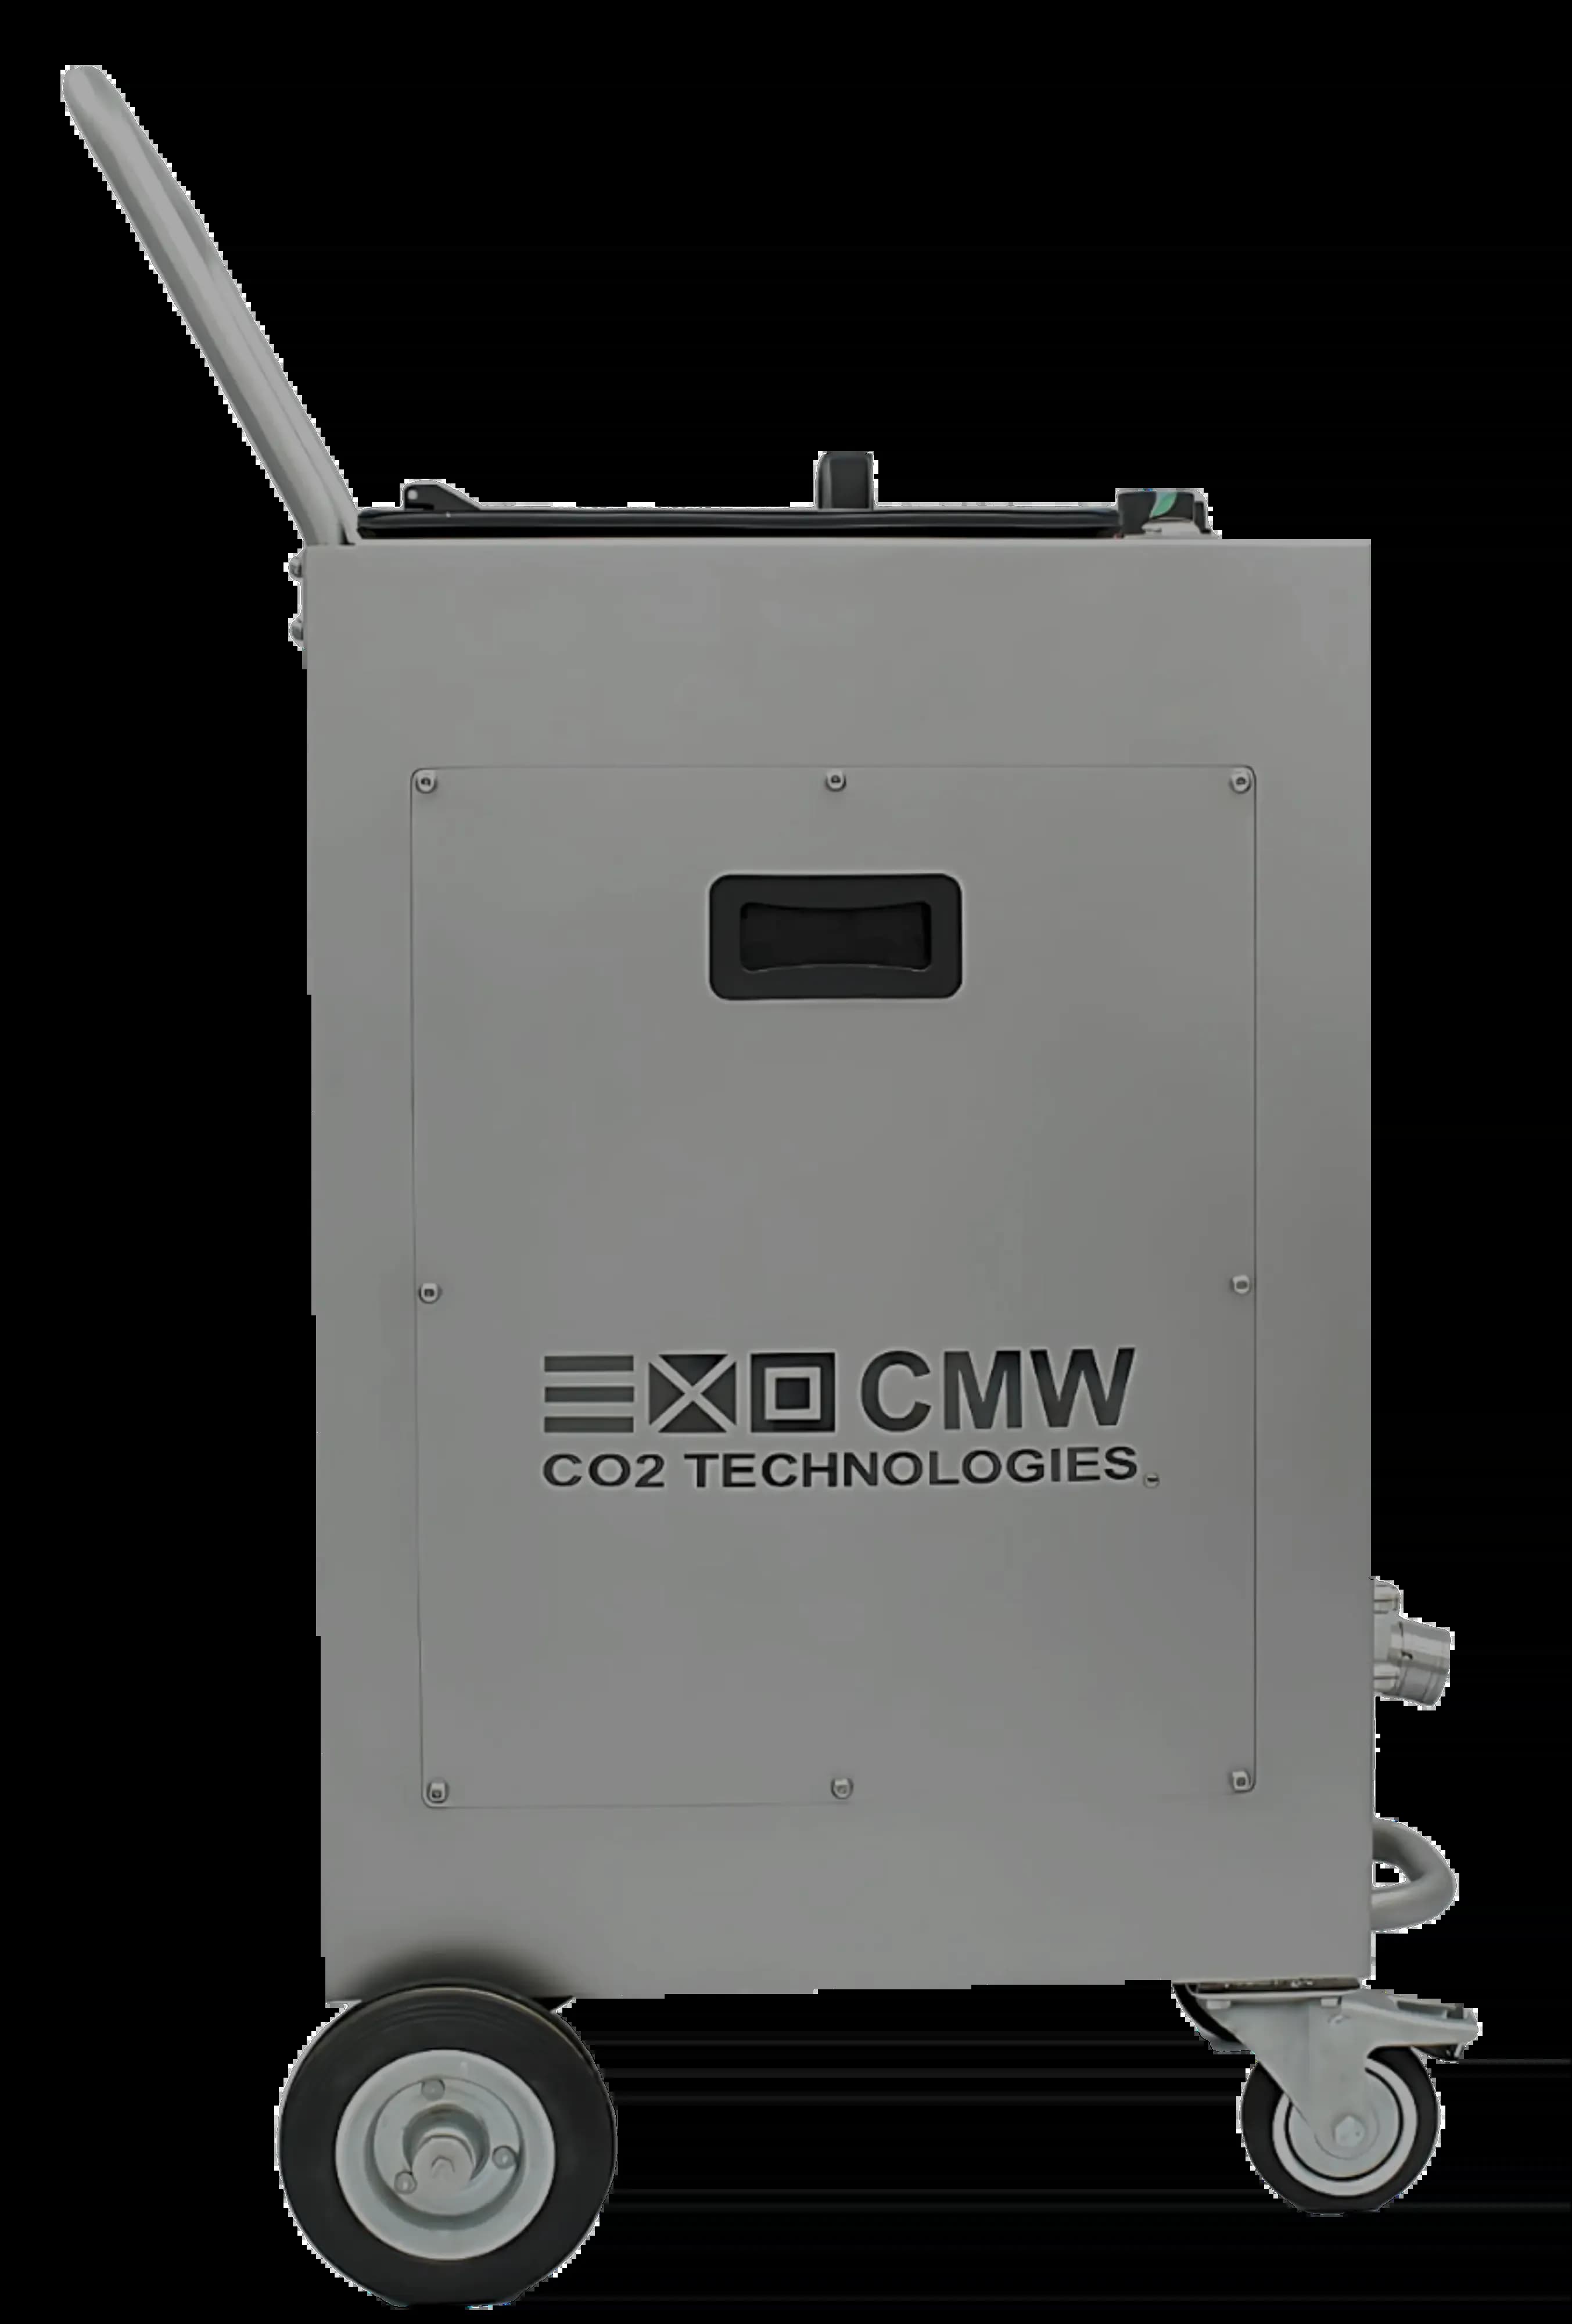 ATX 25 E V1 CMW CO2 Technologies Dry Ice Blasting